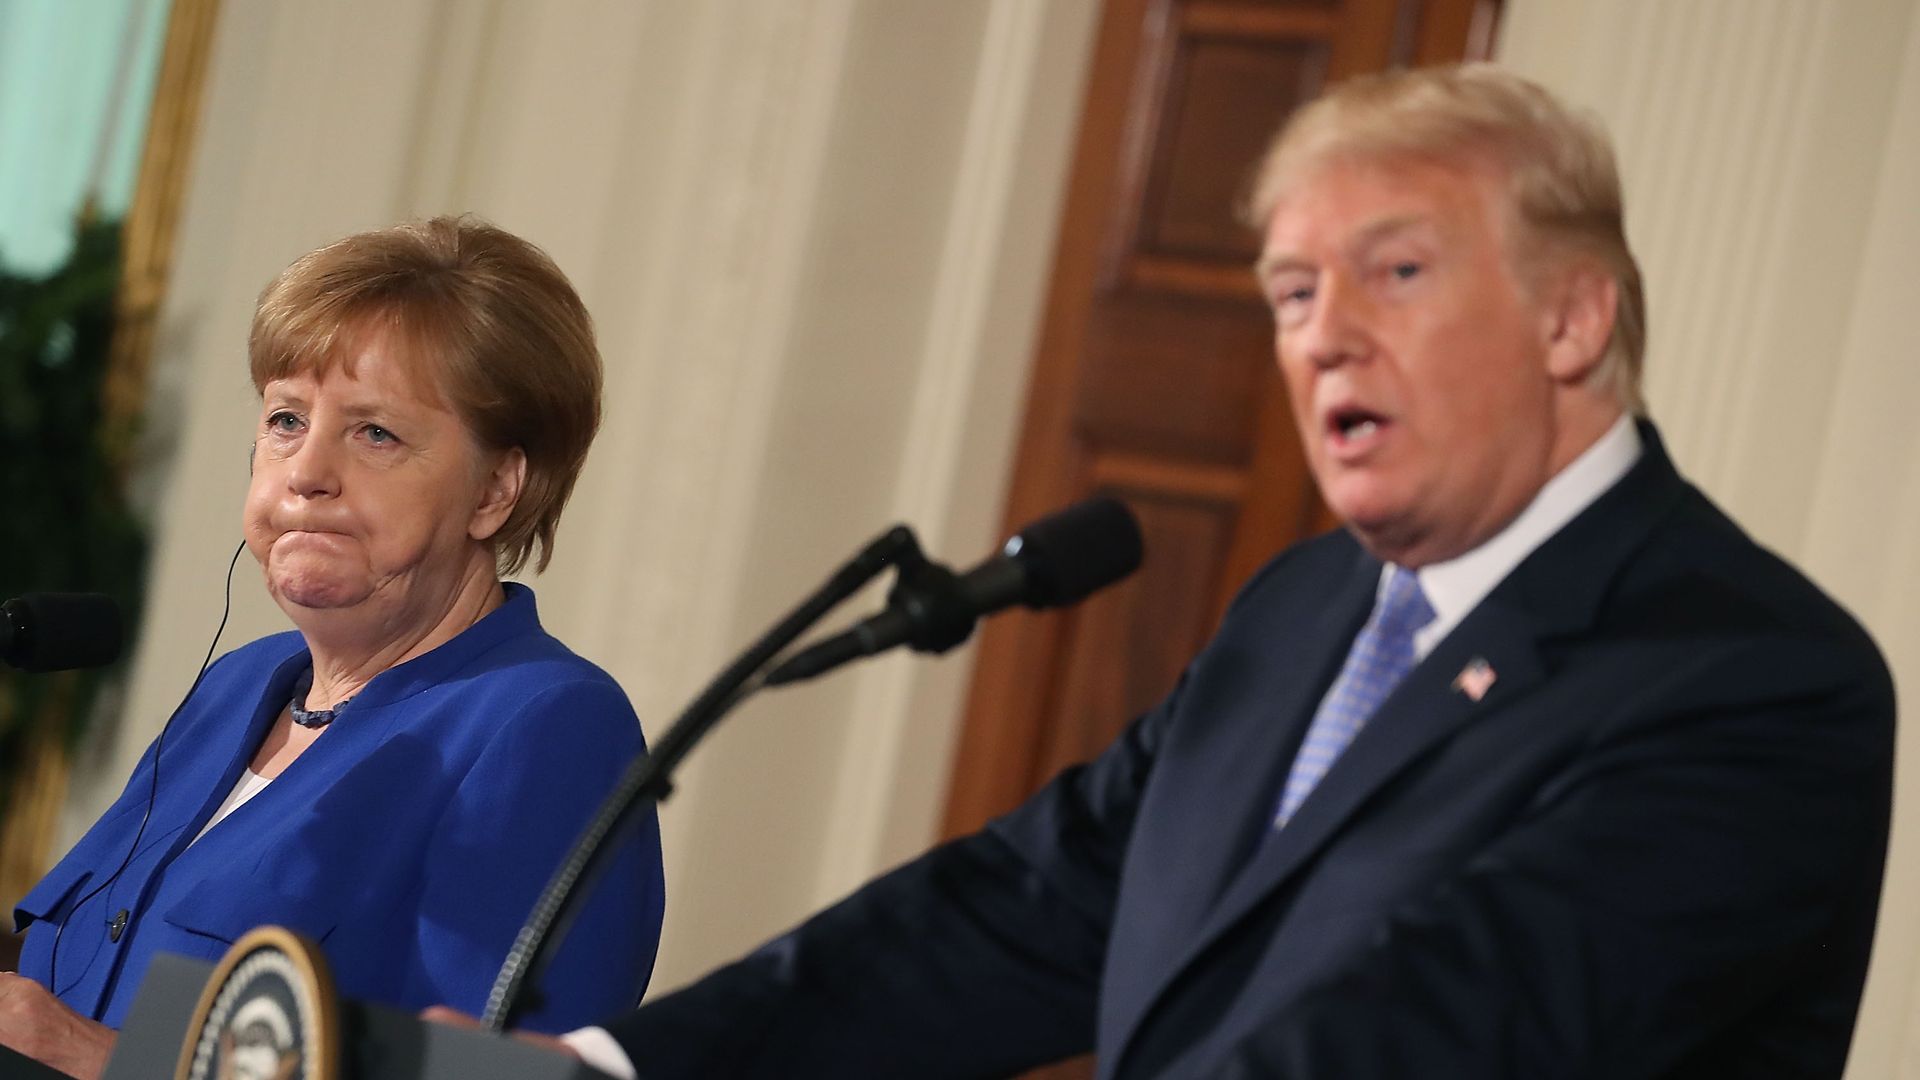 Angela Merkel puffs out her cheeks looking sideways at Trump.